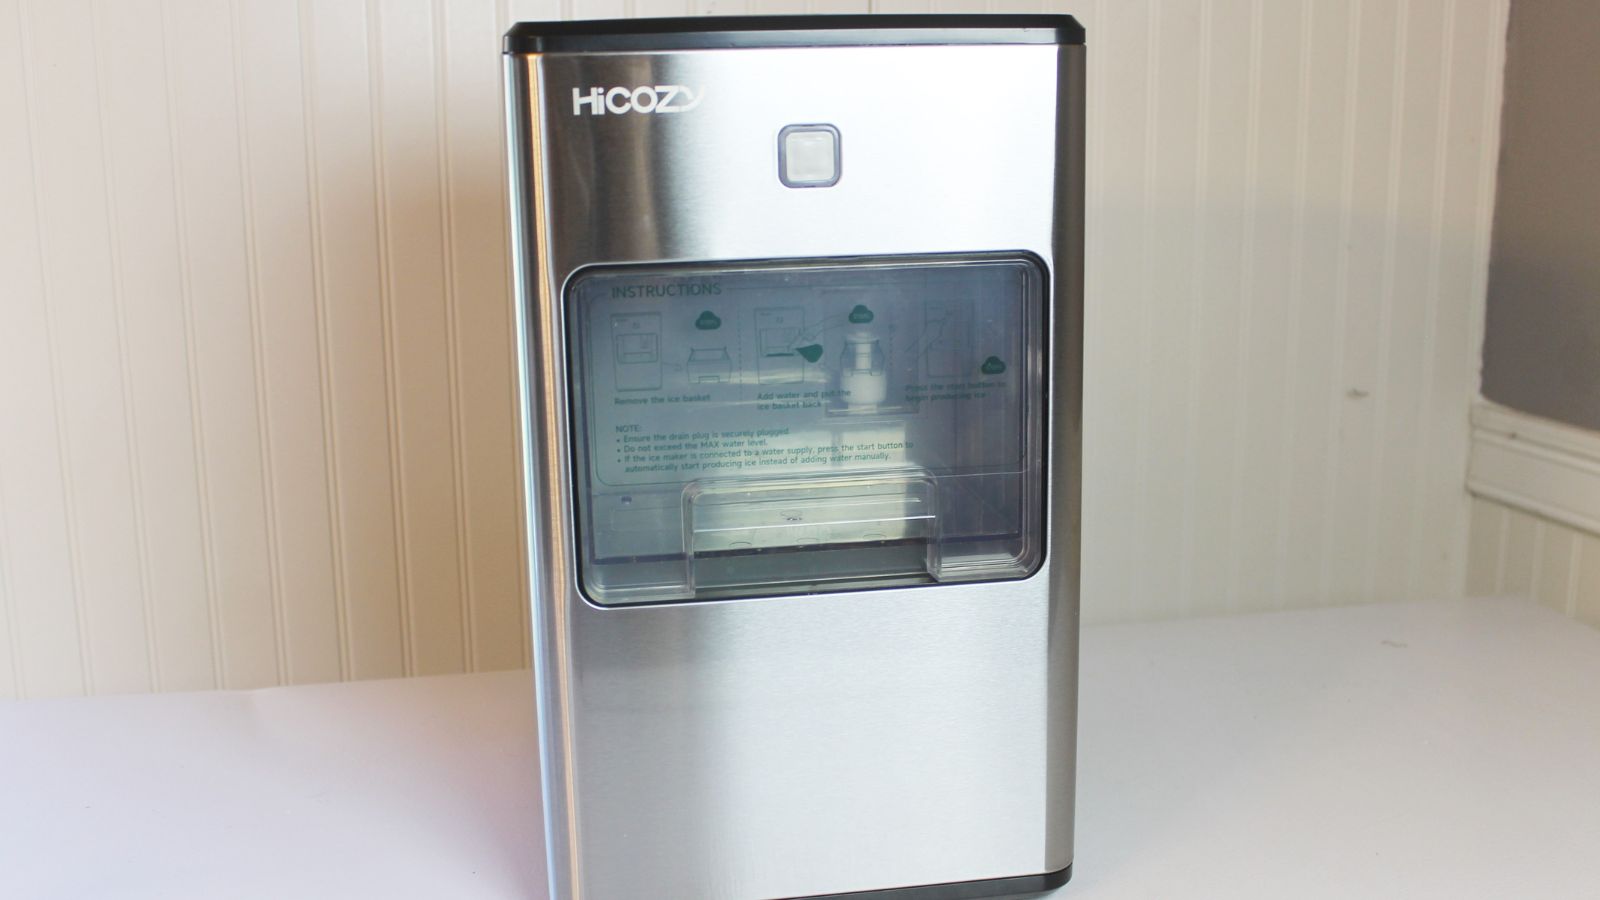 Ecozy Nugget Ice Maker!! I LOVE THIS! #tiktokshopblackfriday #10outof1, ecozy nugget ice machine